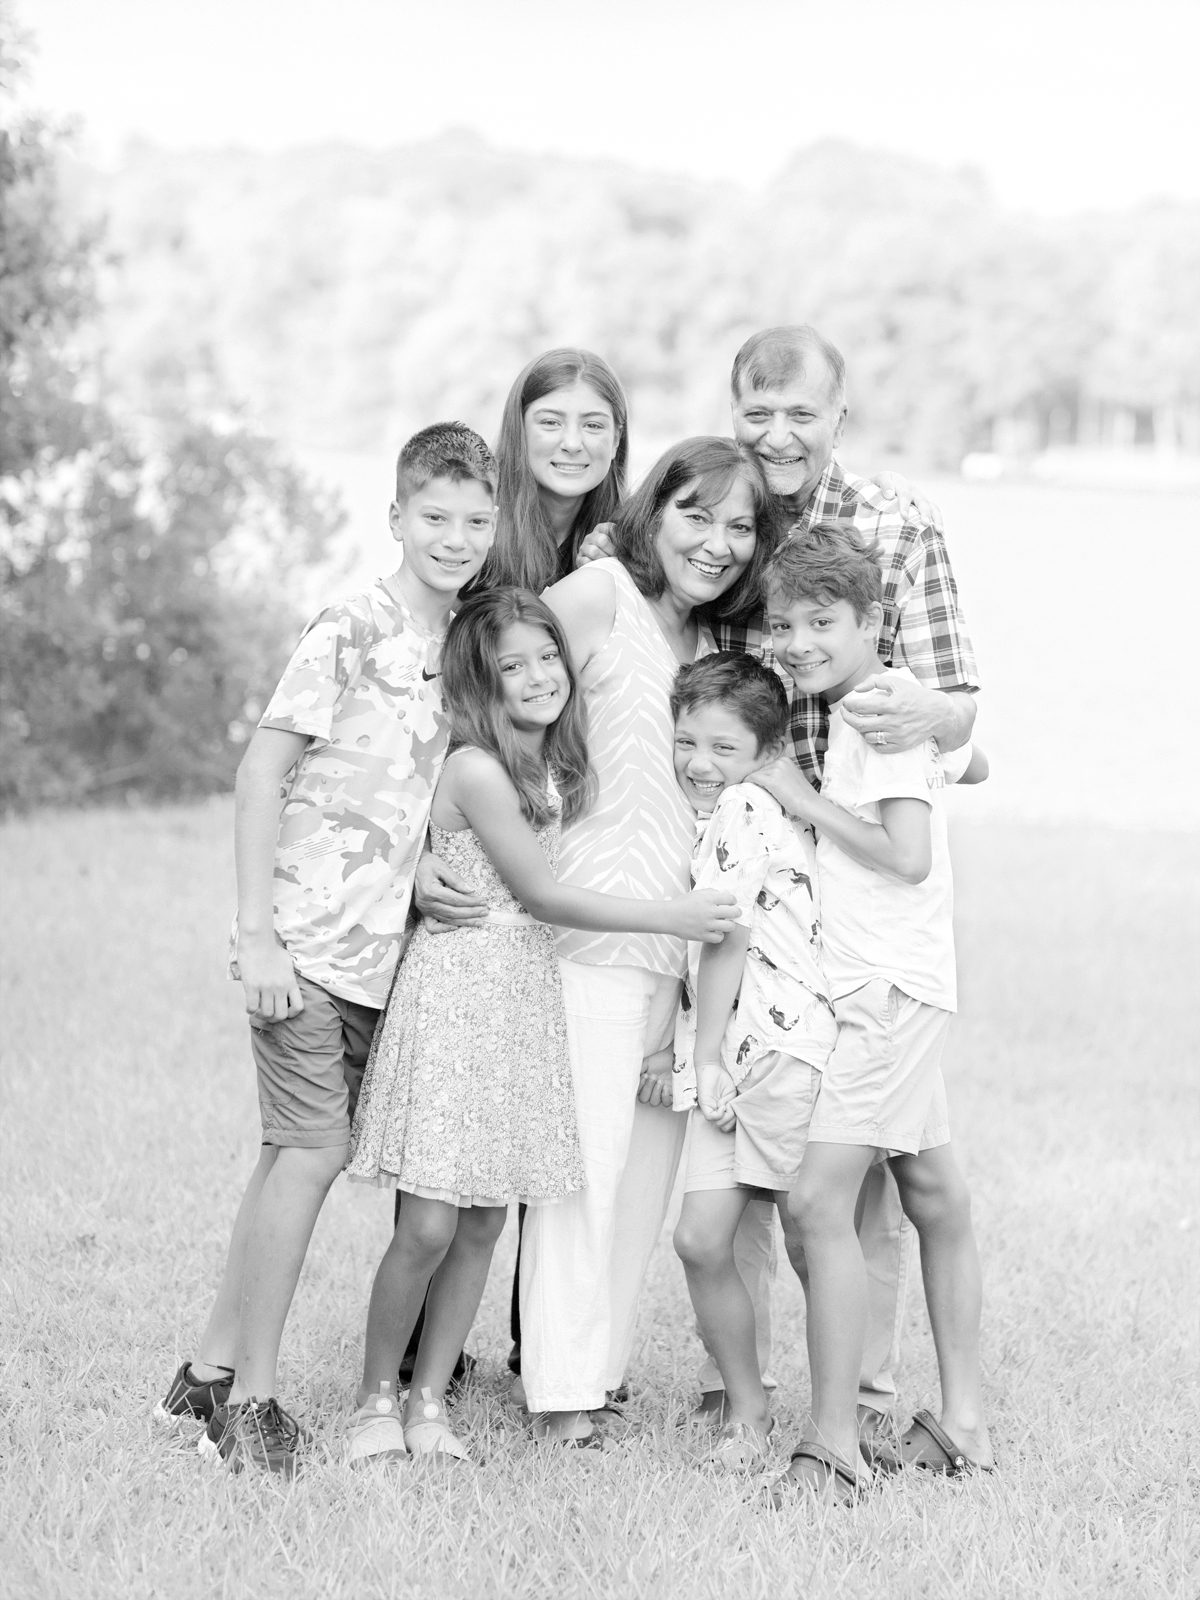 Summer Family Vacation Portraits at Lake Oconee 